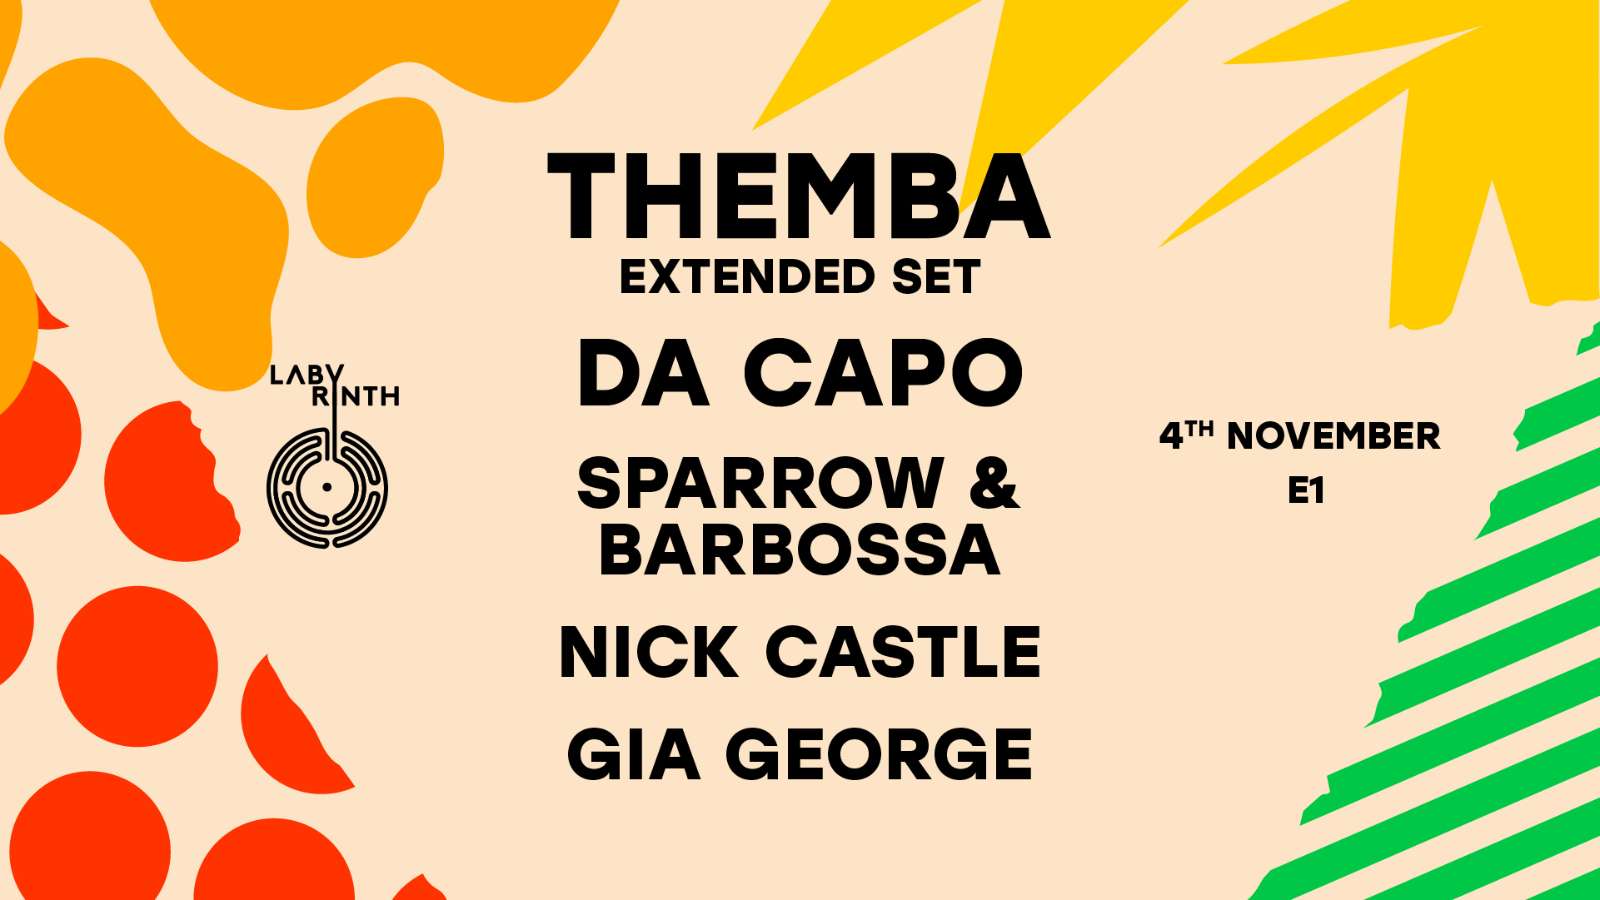 THEMBA Extended Set, Da Capo, Sparrow & Barbossa at E1